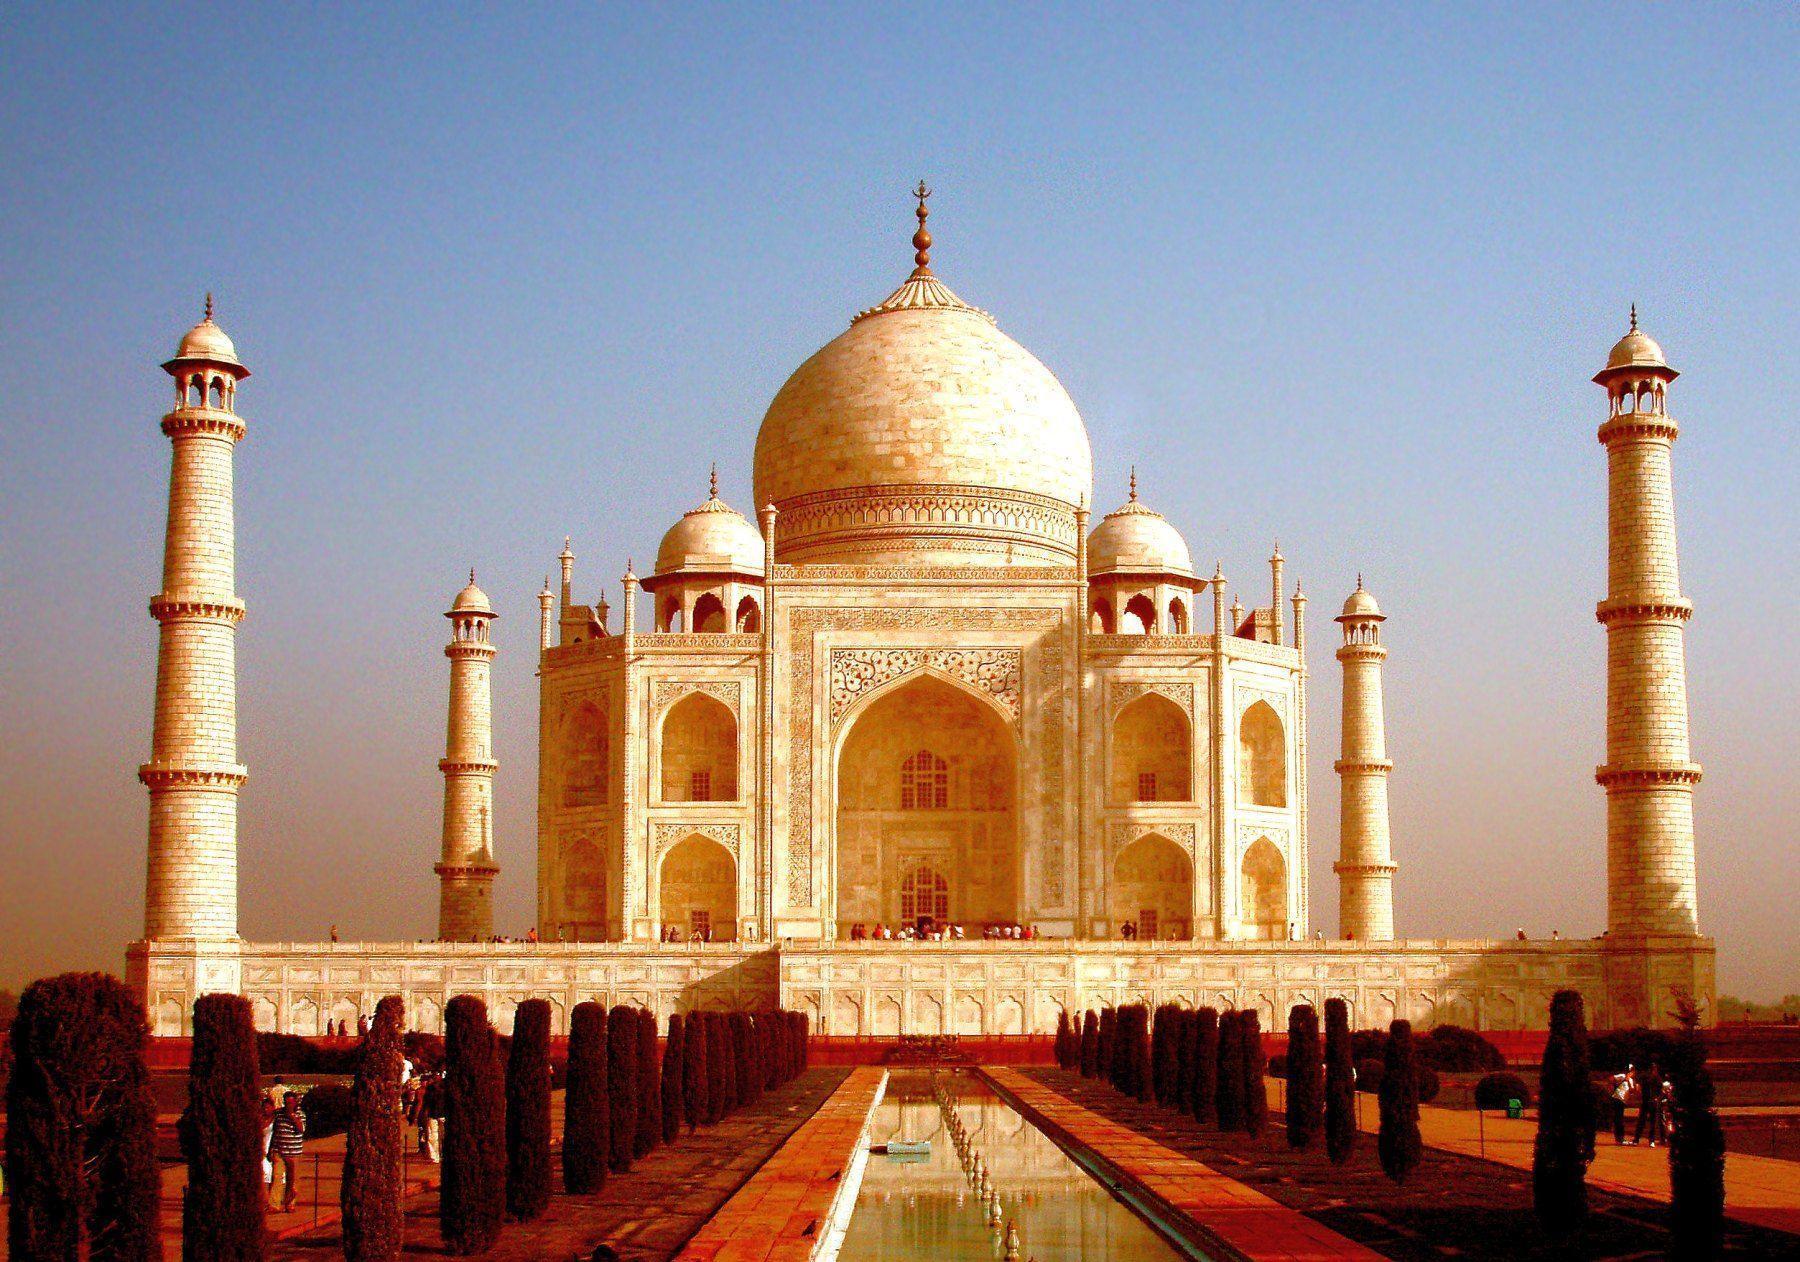 Taj Mahal Agra 2K Wallpapers for Desk 4K High Resolution Backgrounds